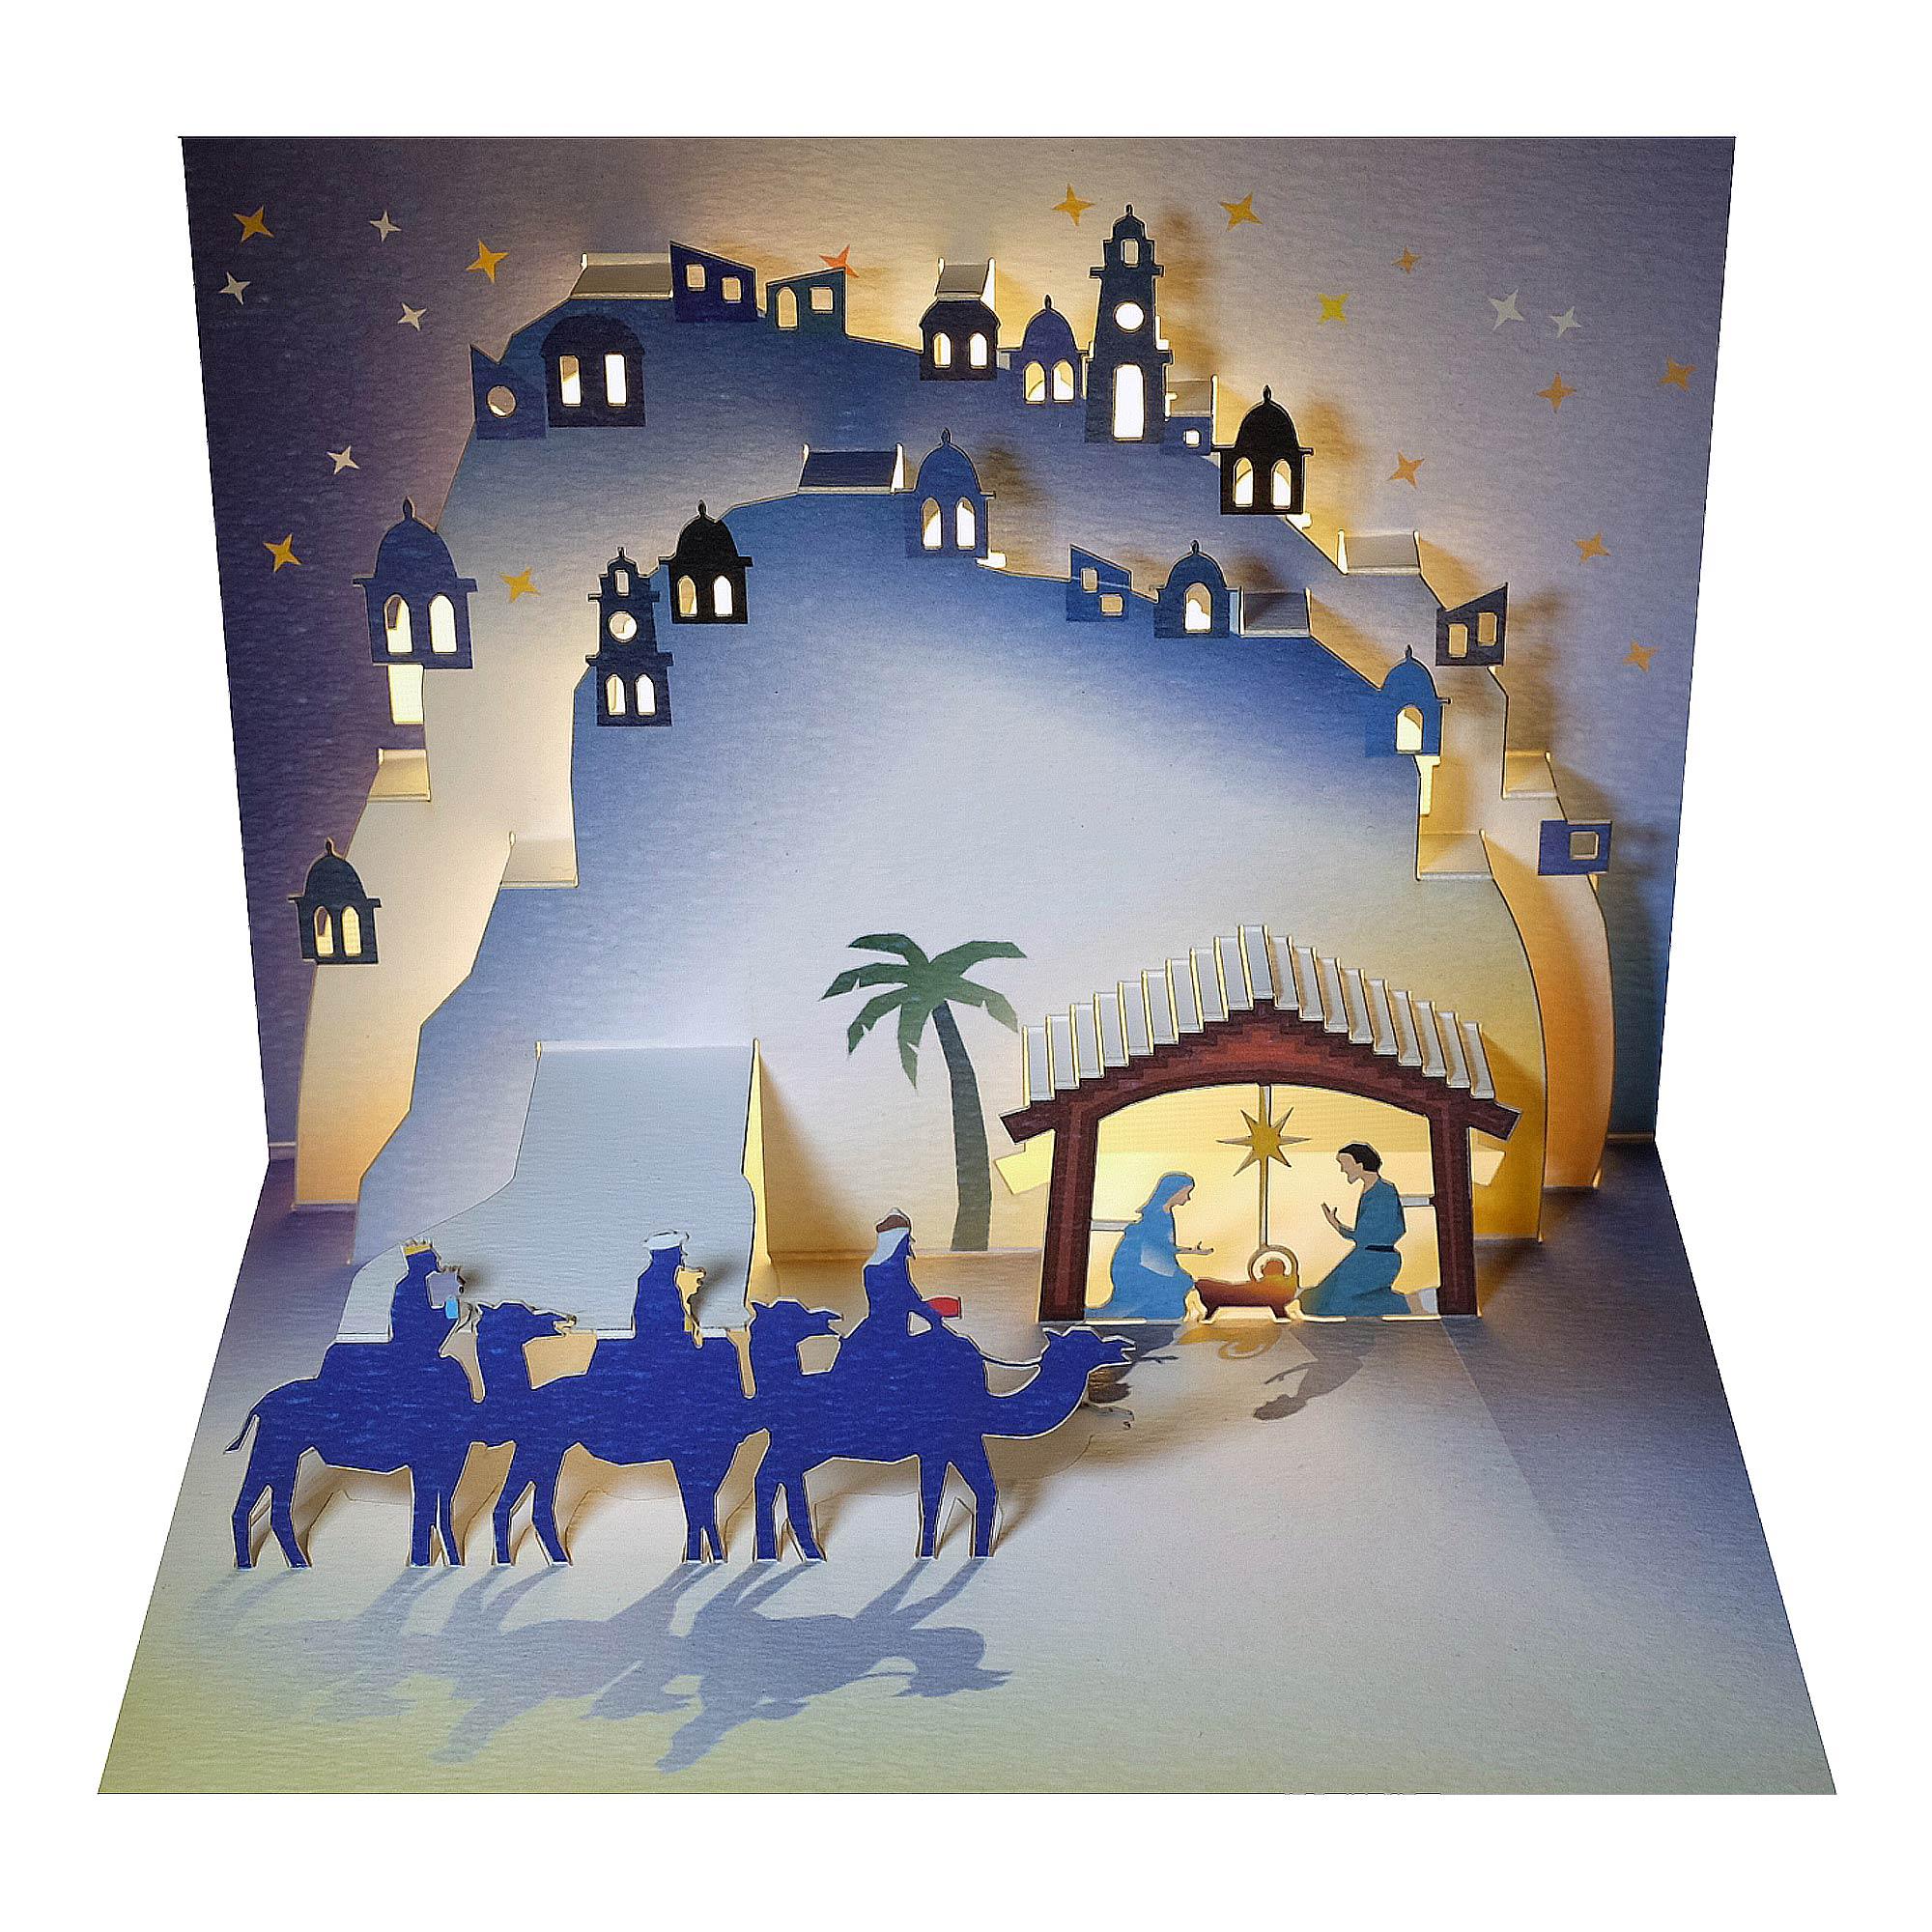 Christmas 3 Wise Men Nativity Scene - Amazing Pop-up Laser Cut Greeting Card